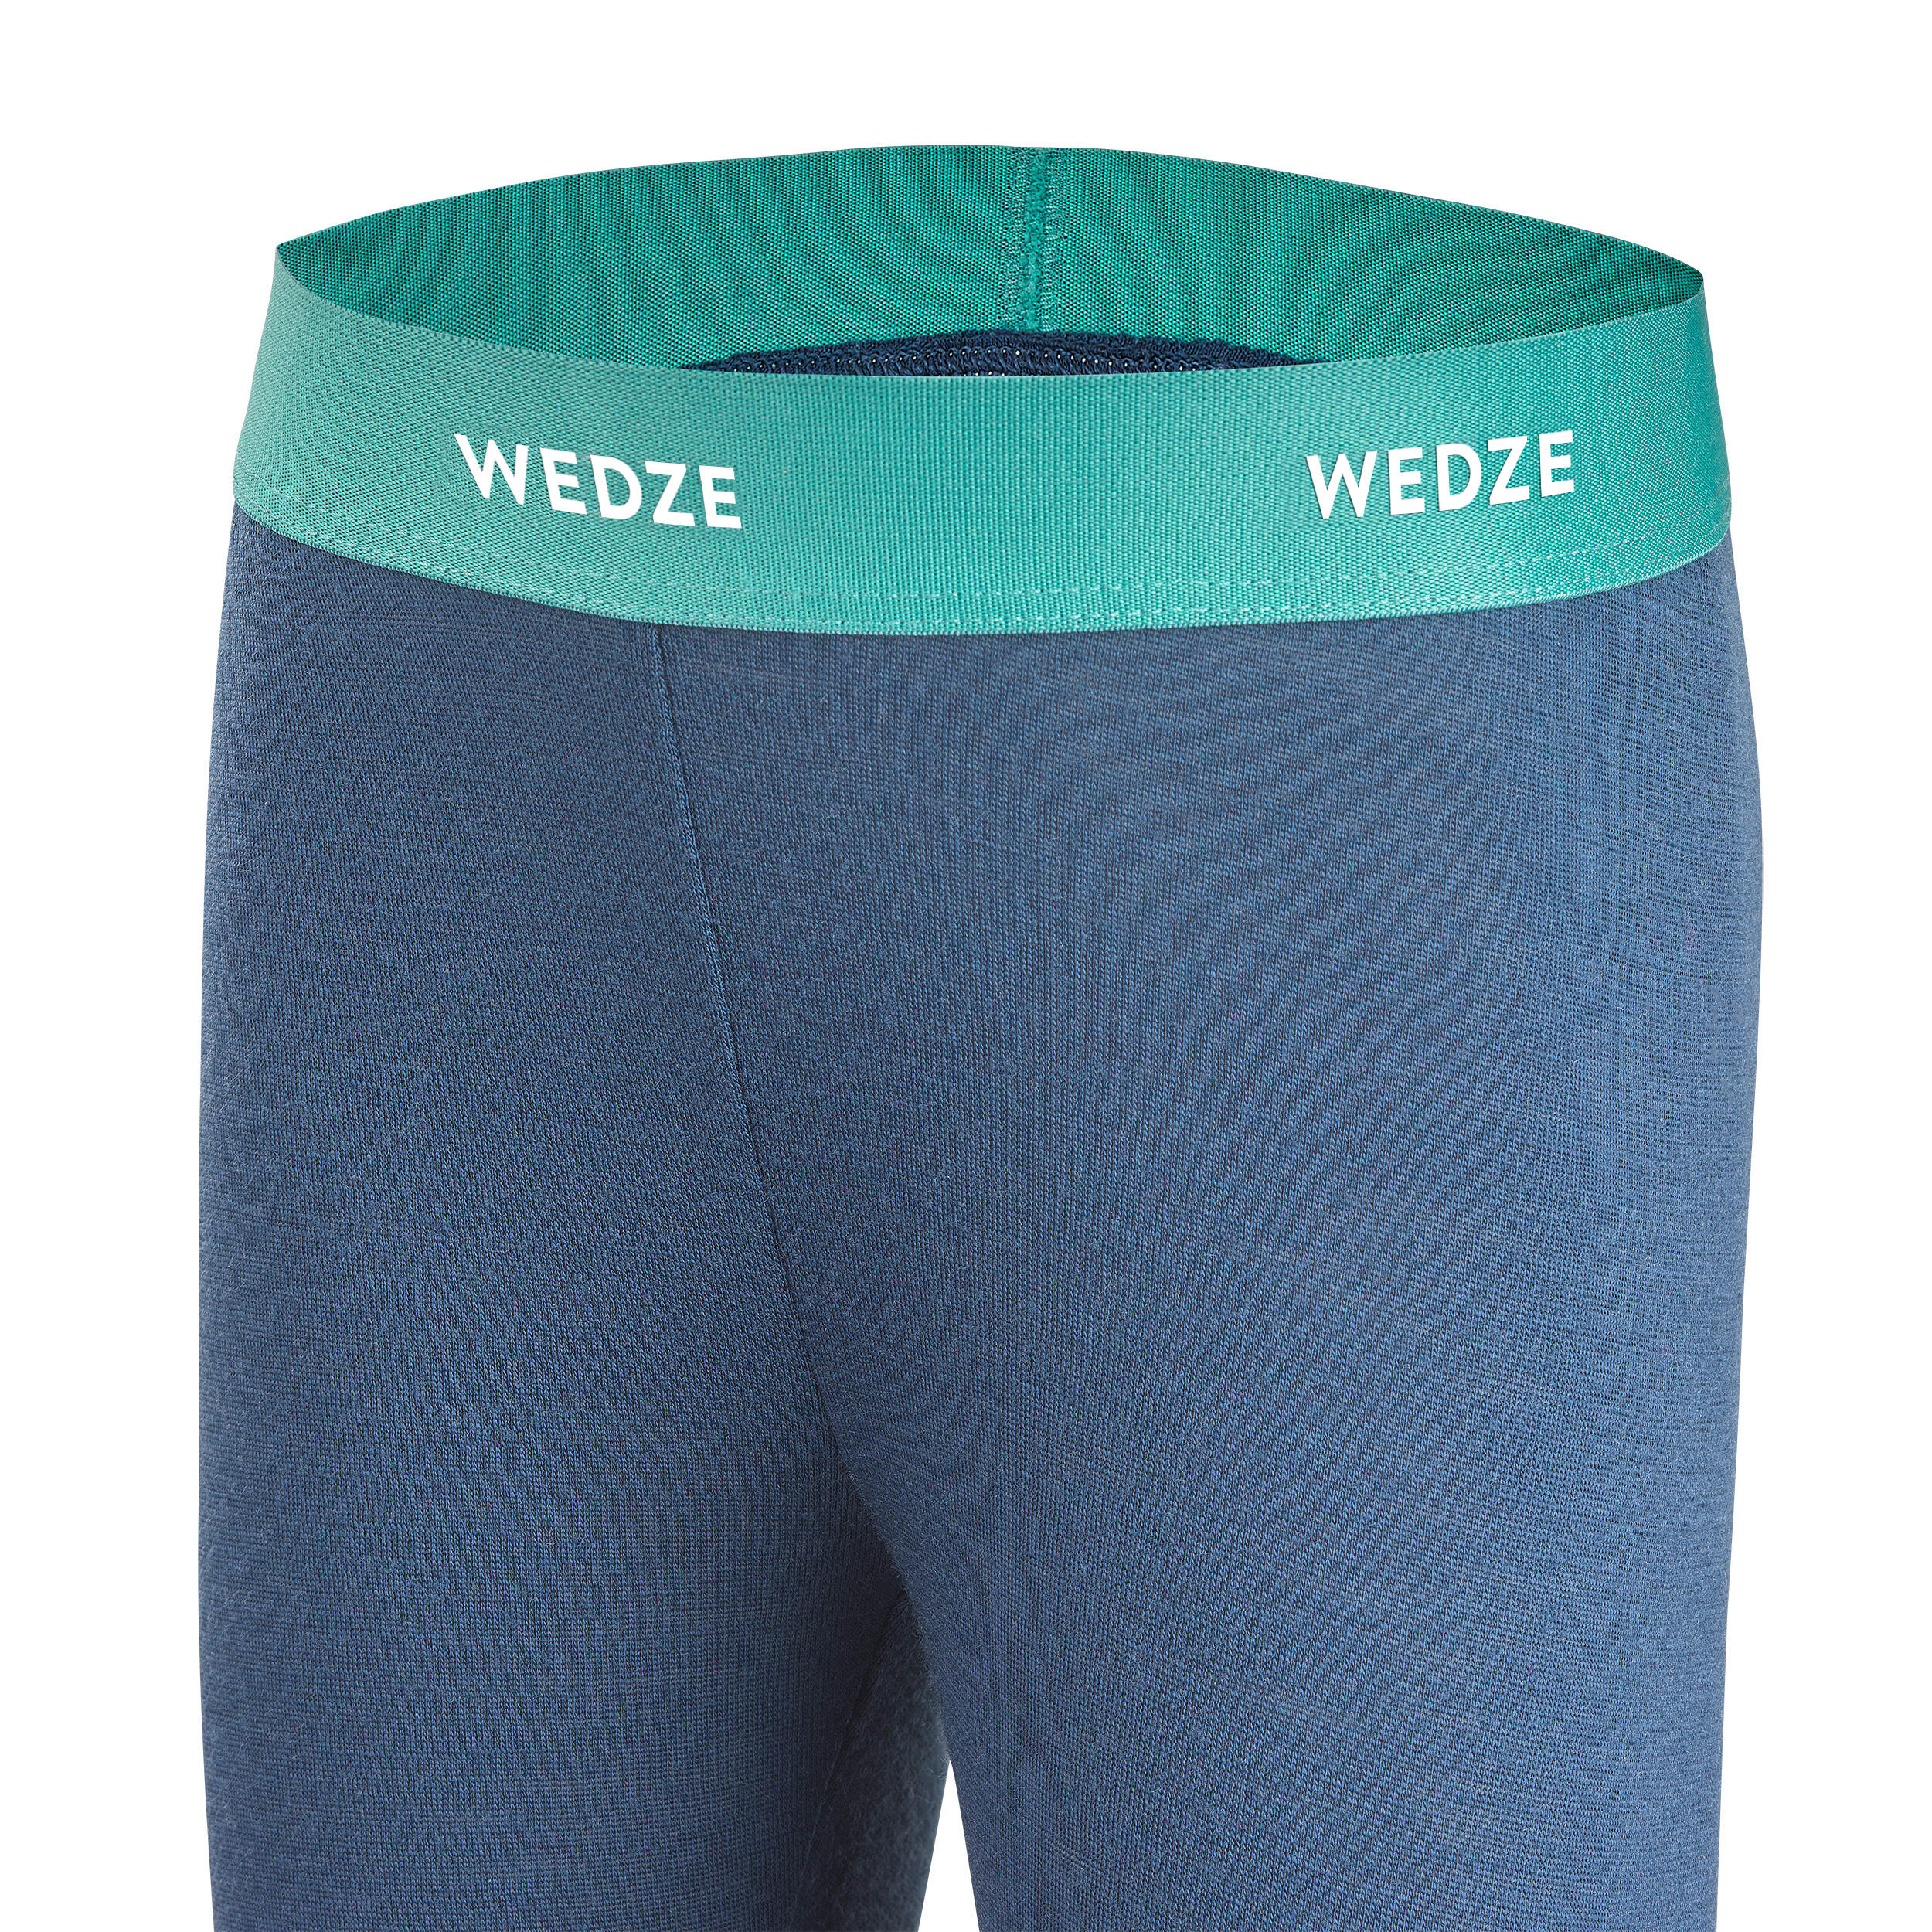 Kids' Merino Wool Base Layer Bottoms - 900 Blue - Dark blue, [EN] ash blue  - Wedze - Decathlon